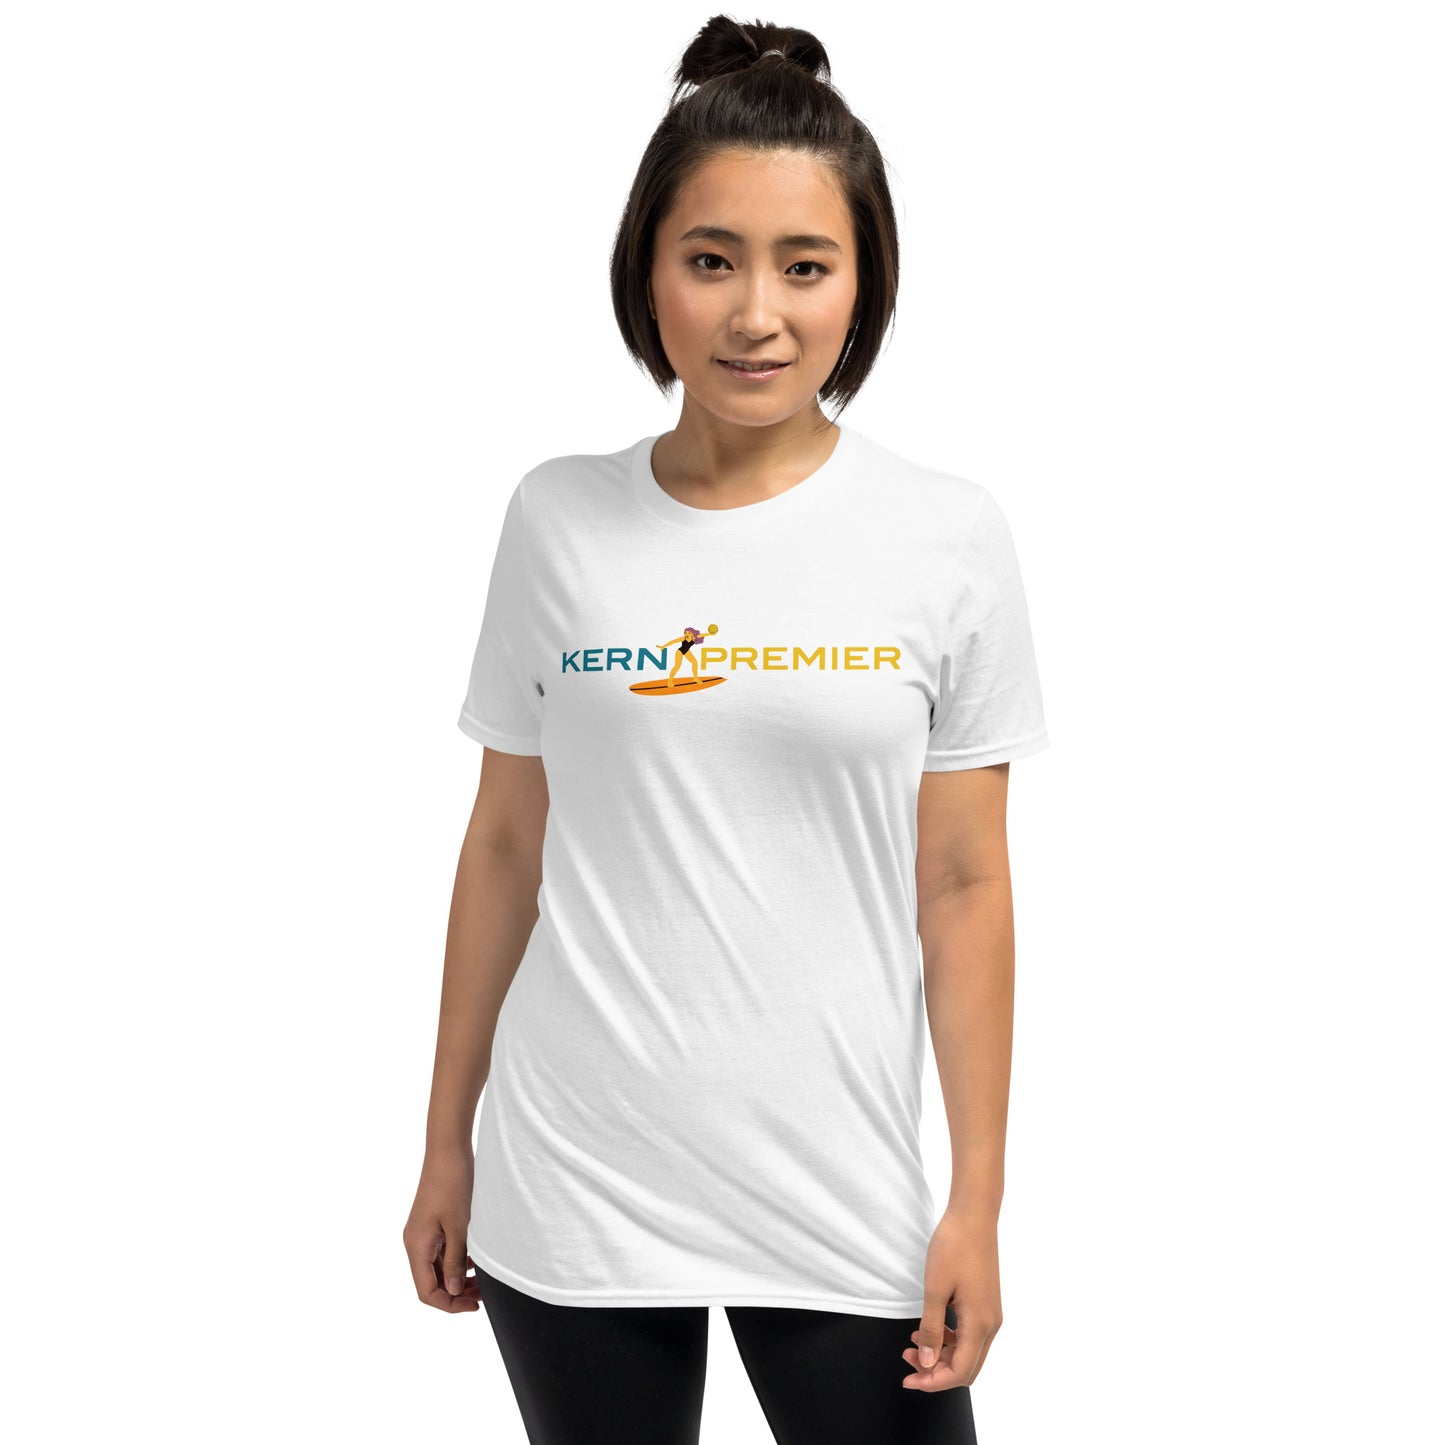 Kern Premier Junior Olympics girl Gildan Short-Sleeve Unisex T-Shirt